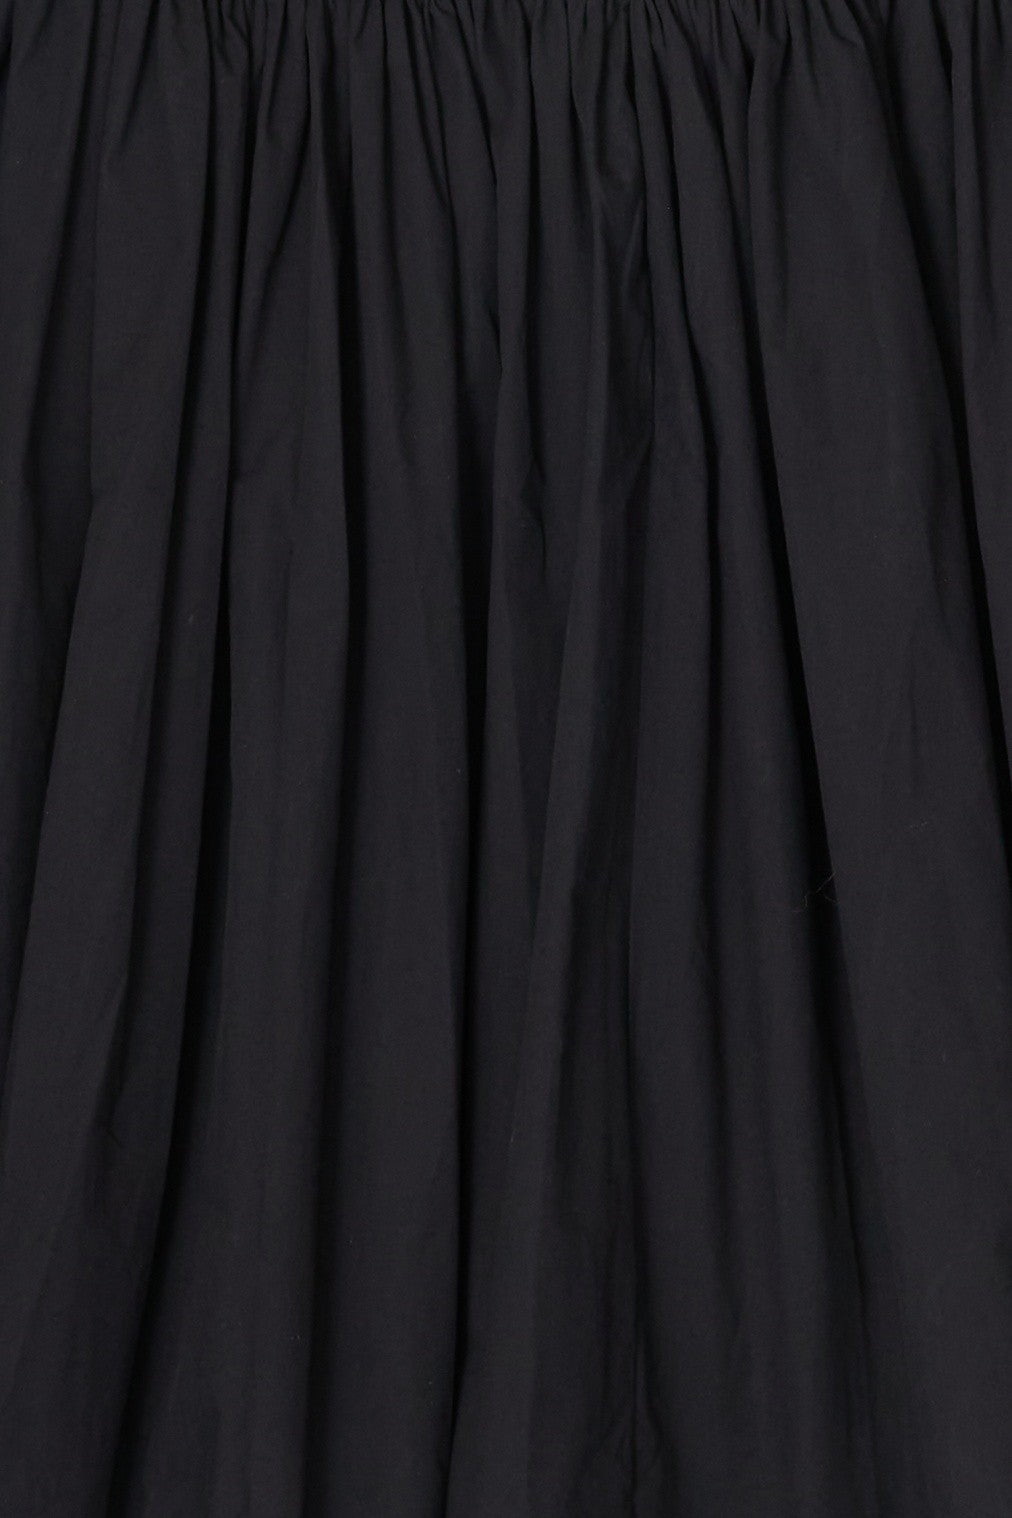 The Mariana Skirt - Black